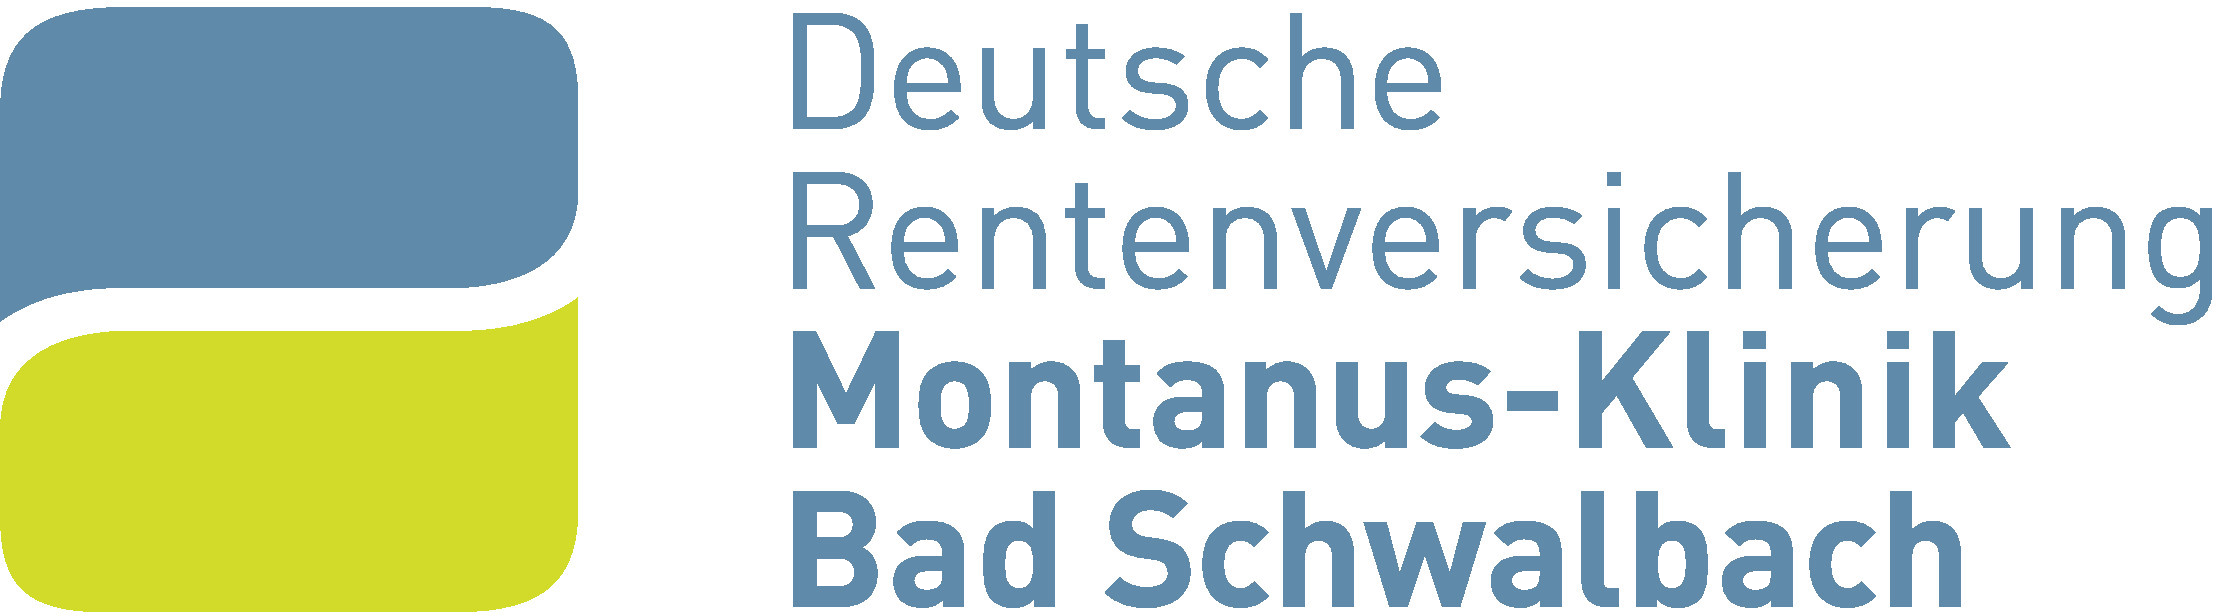 Montanus-Klinik Bad Schwalbach